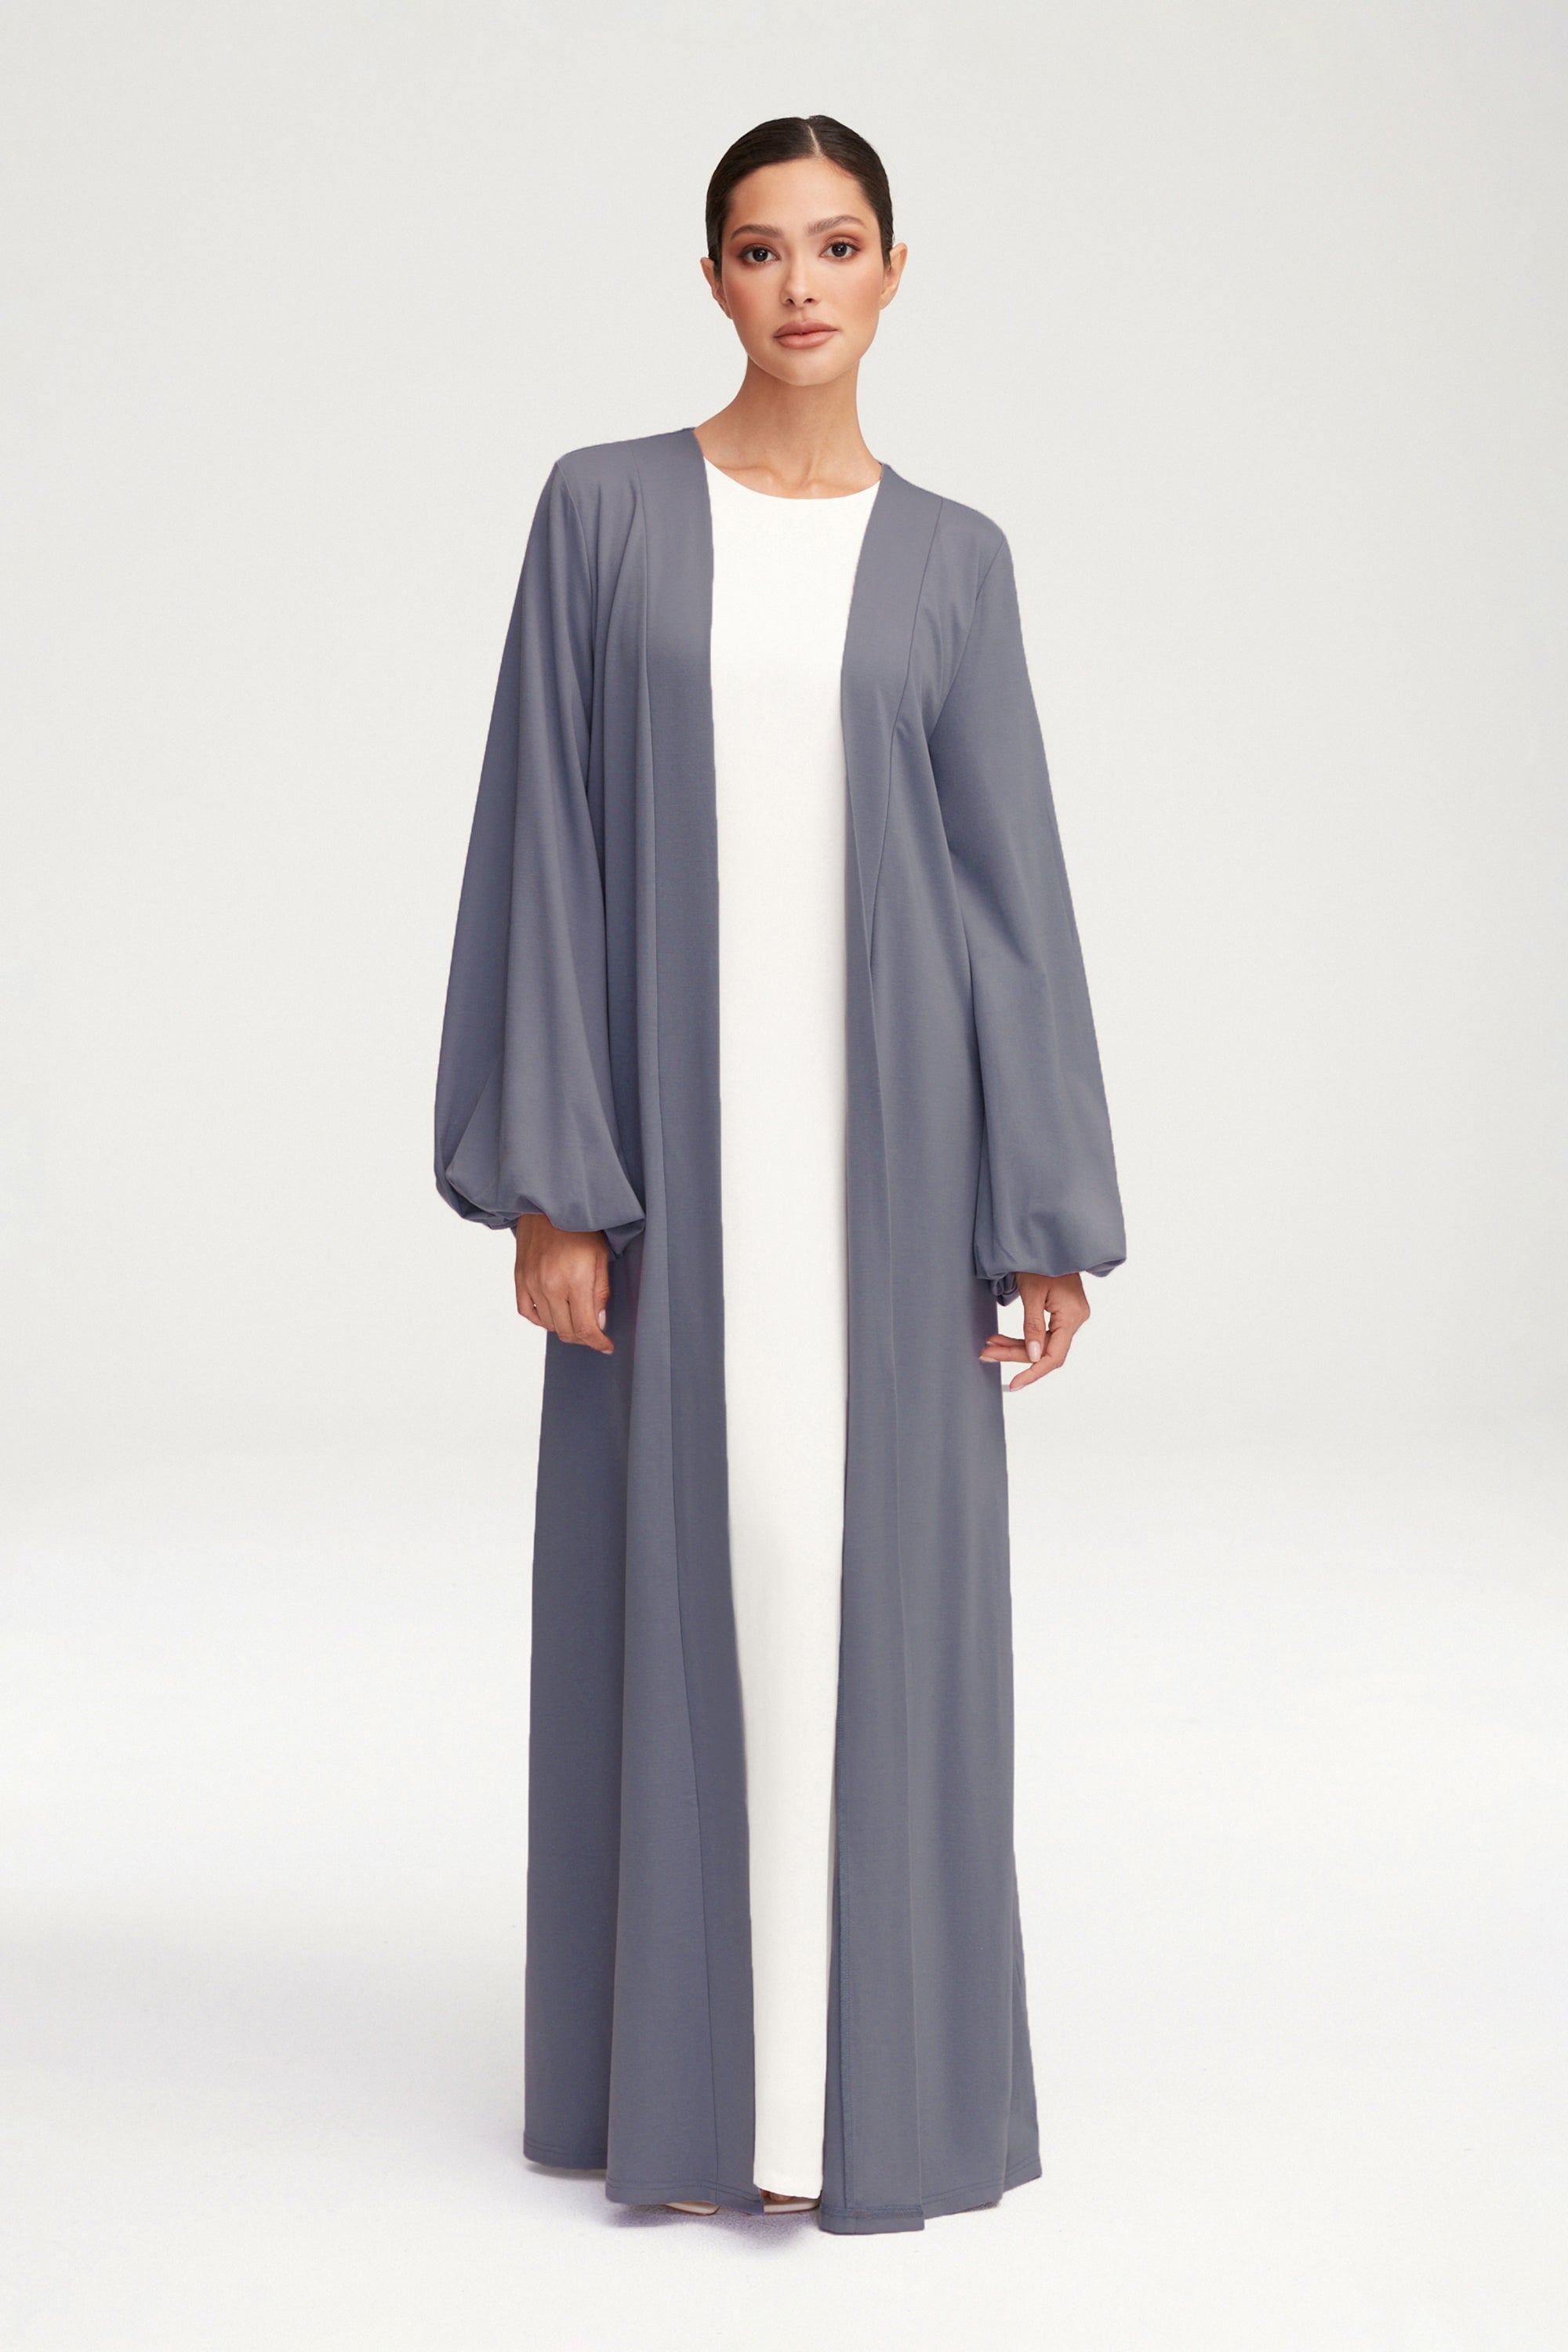 Essential Jersey Open Abaya - Denim Clothing Veiled 